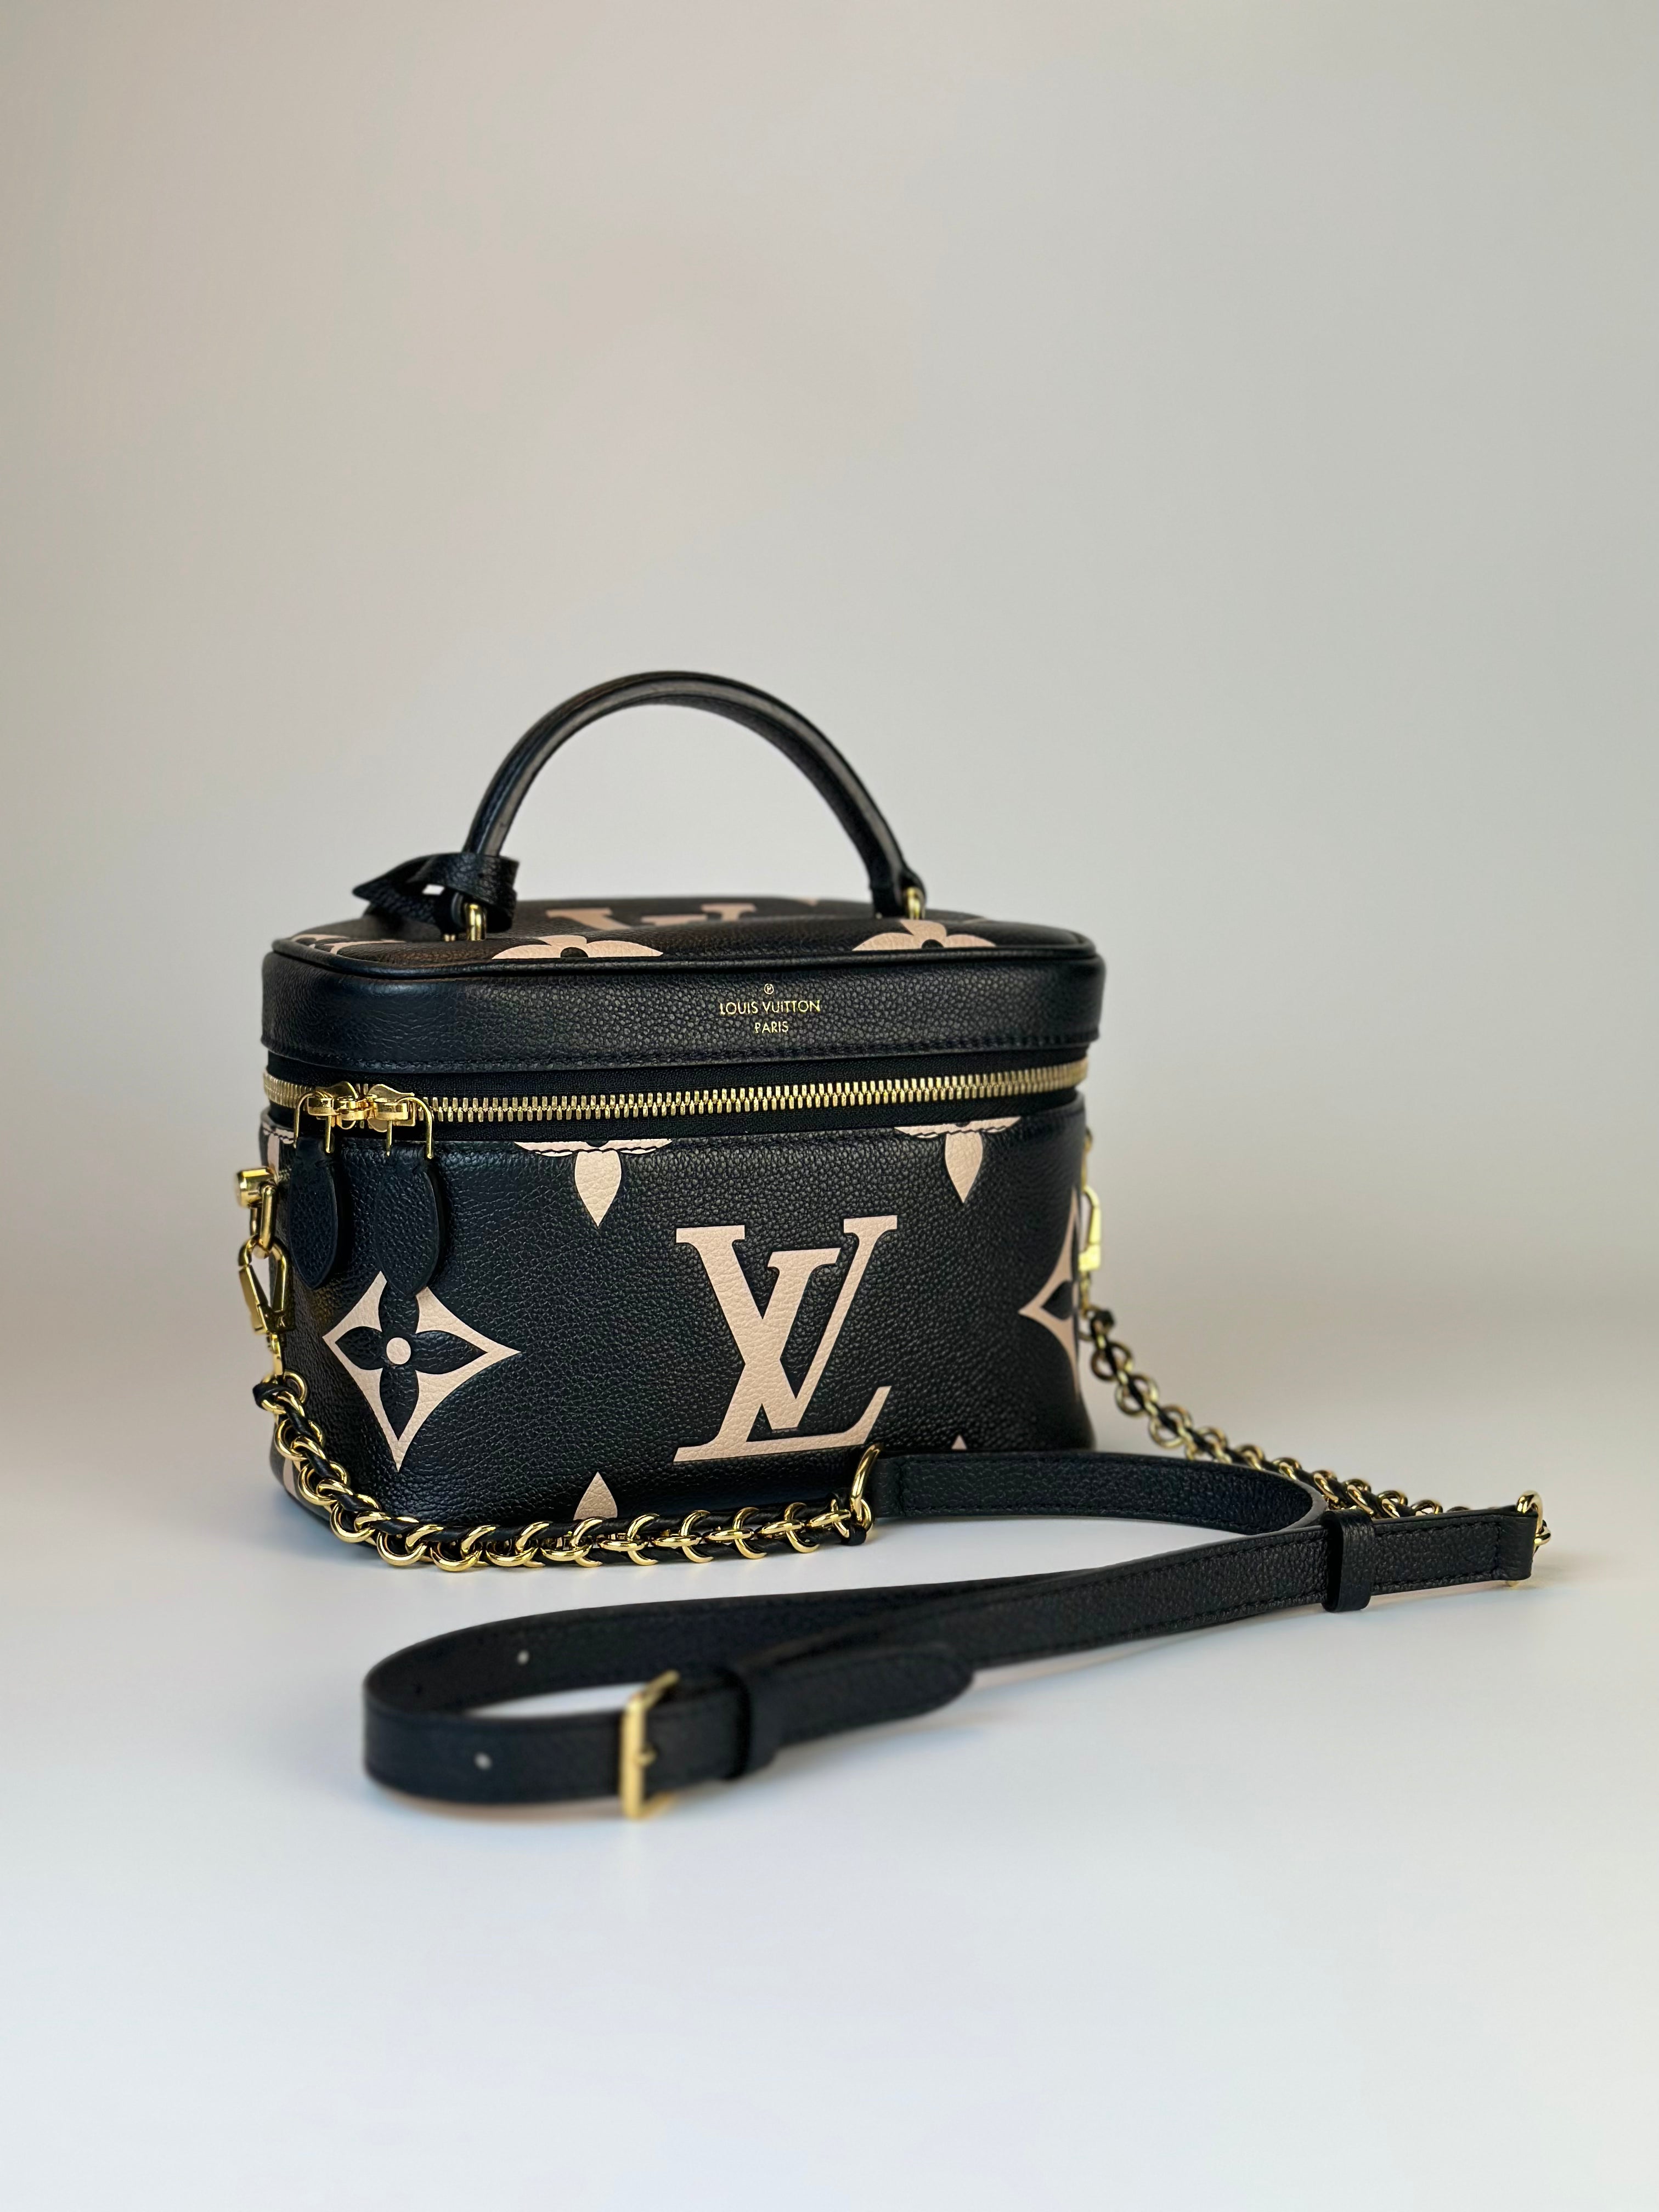 Louis Vuitton Vanity PM